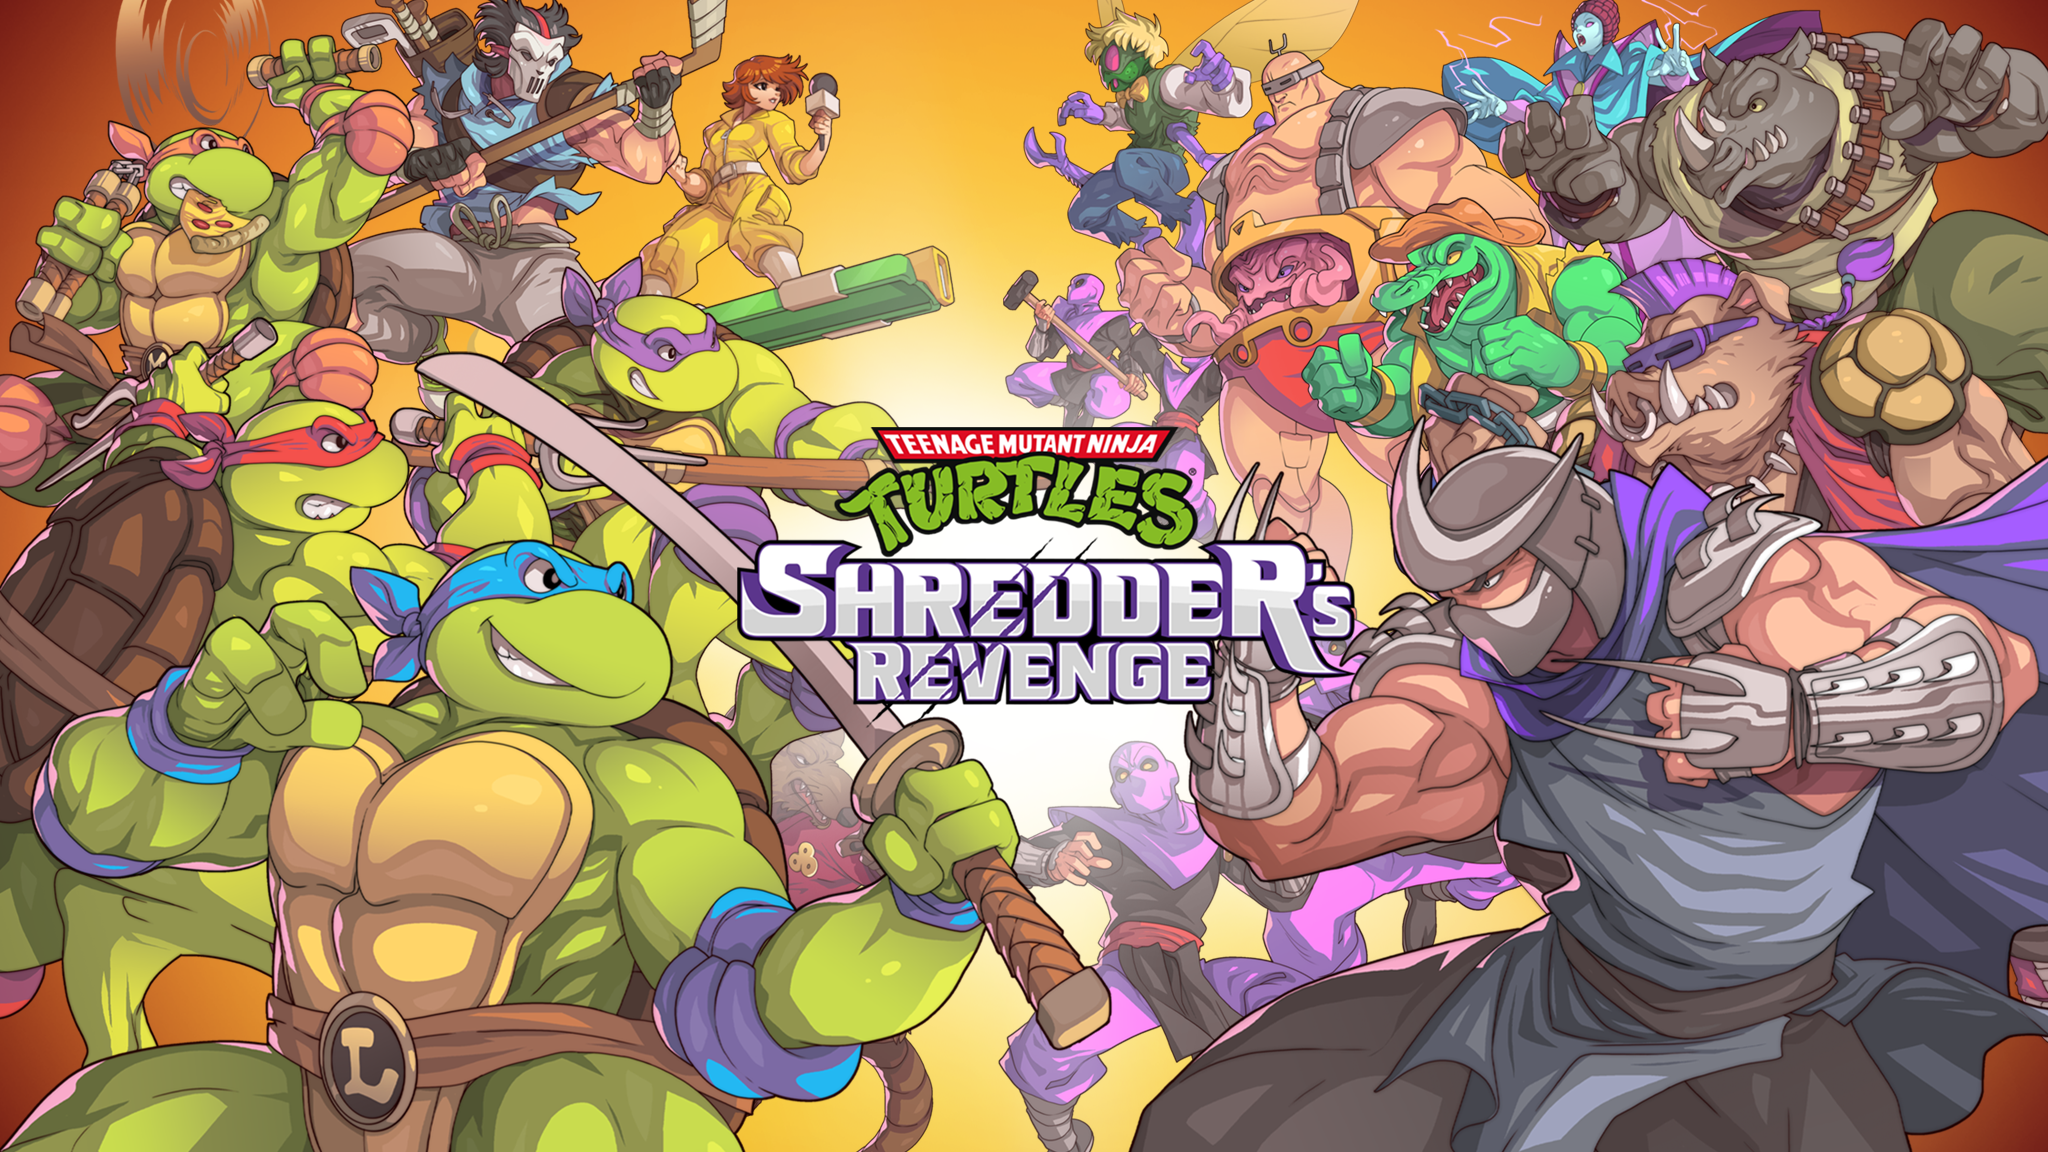 Tmnt shredder android. Turtles Shredder Revenge. TMNT Shredder s Revenge. TMNT Shredder Revenge. Игра Черепашки ниндзя месть Шредера.